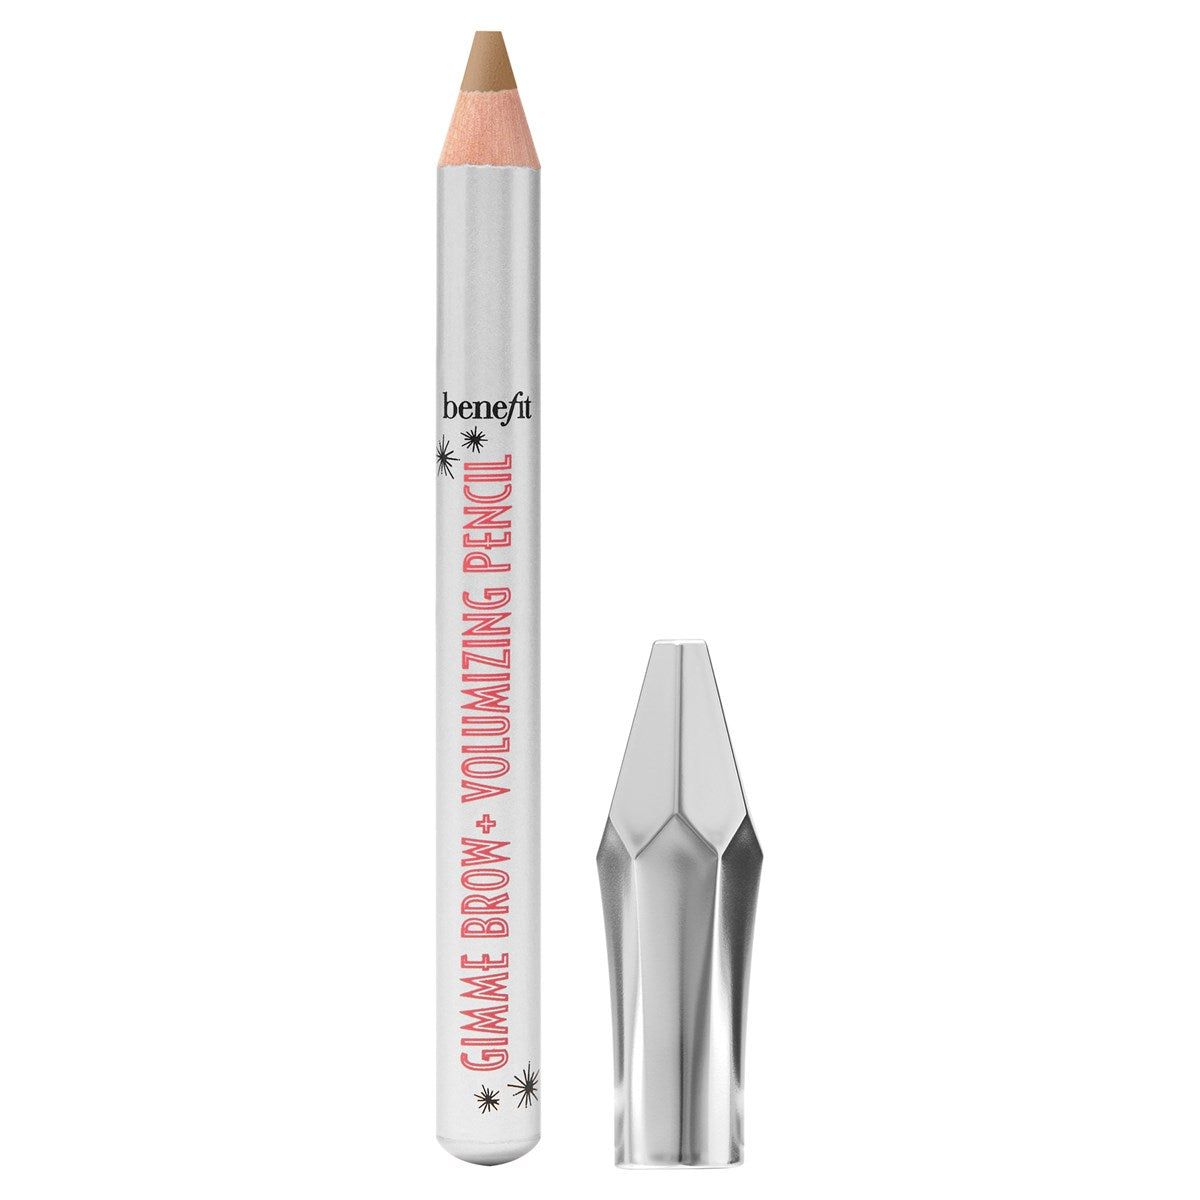 Benefit Карандаш для бровей Gimme Brow+ Volumizing Pencil Мини-карандаш для бровей 02 Теплый золотистый блондин 0,6 г